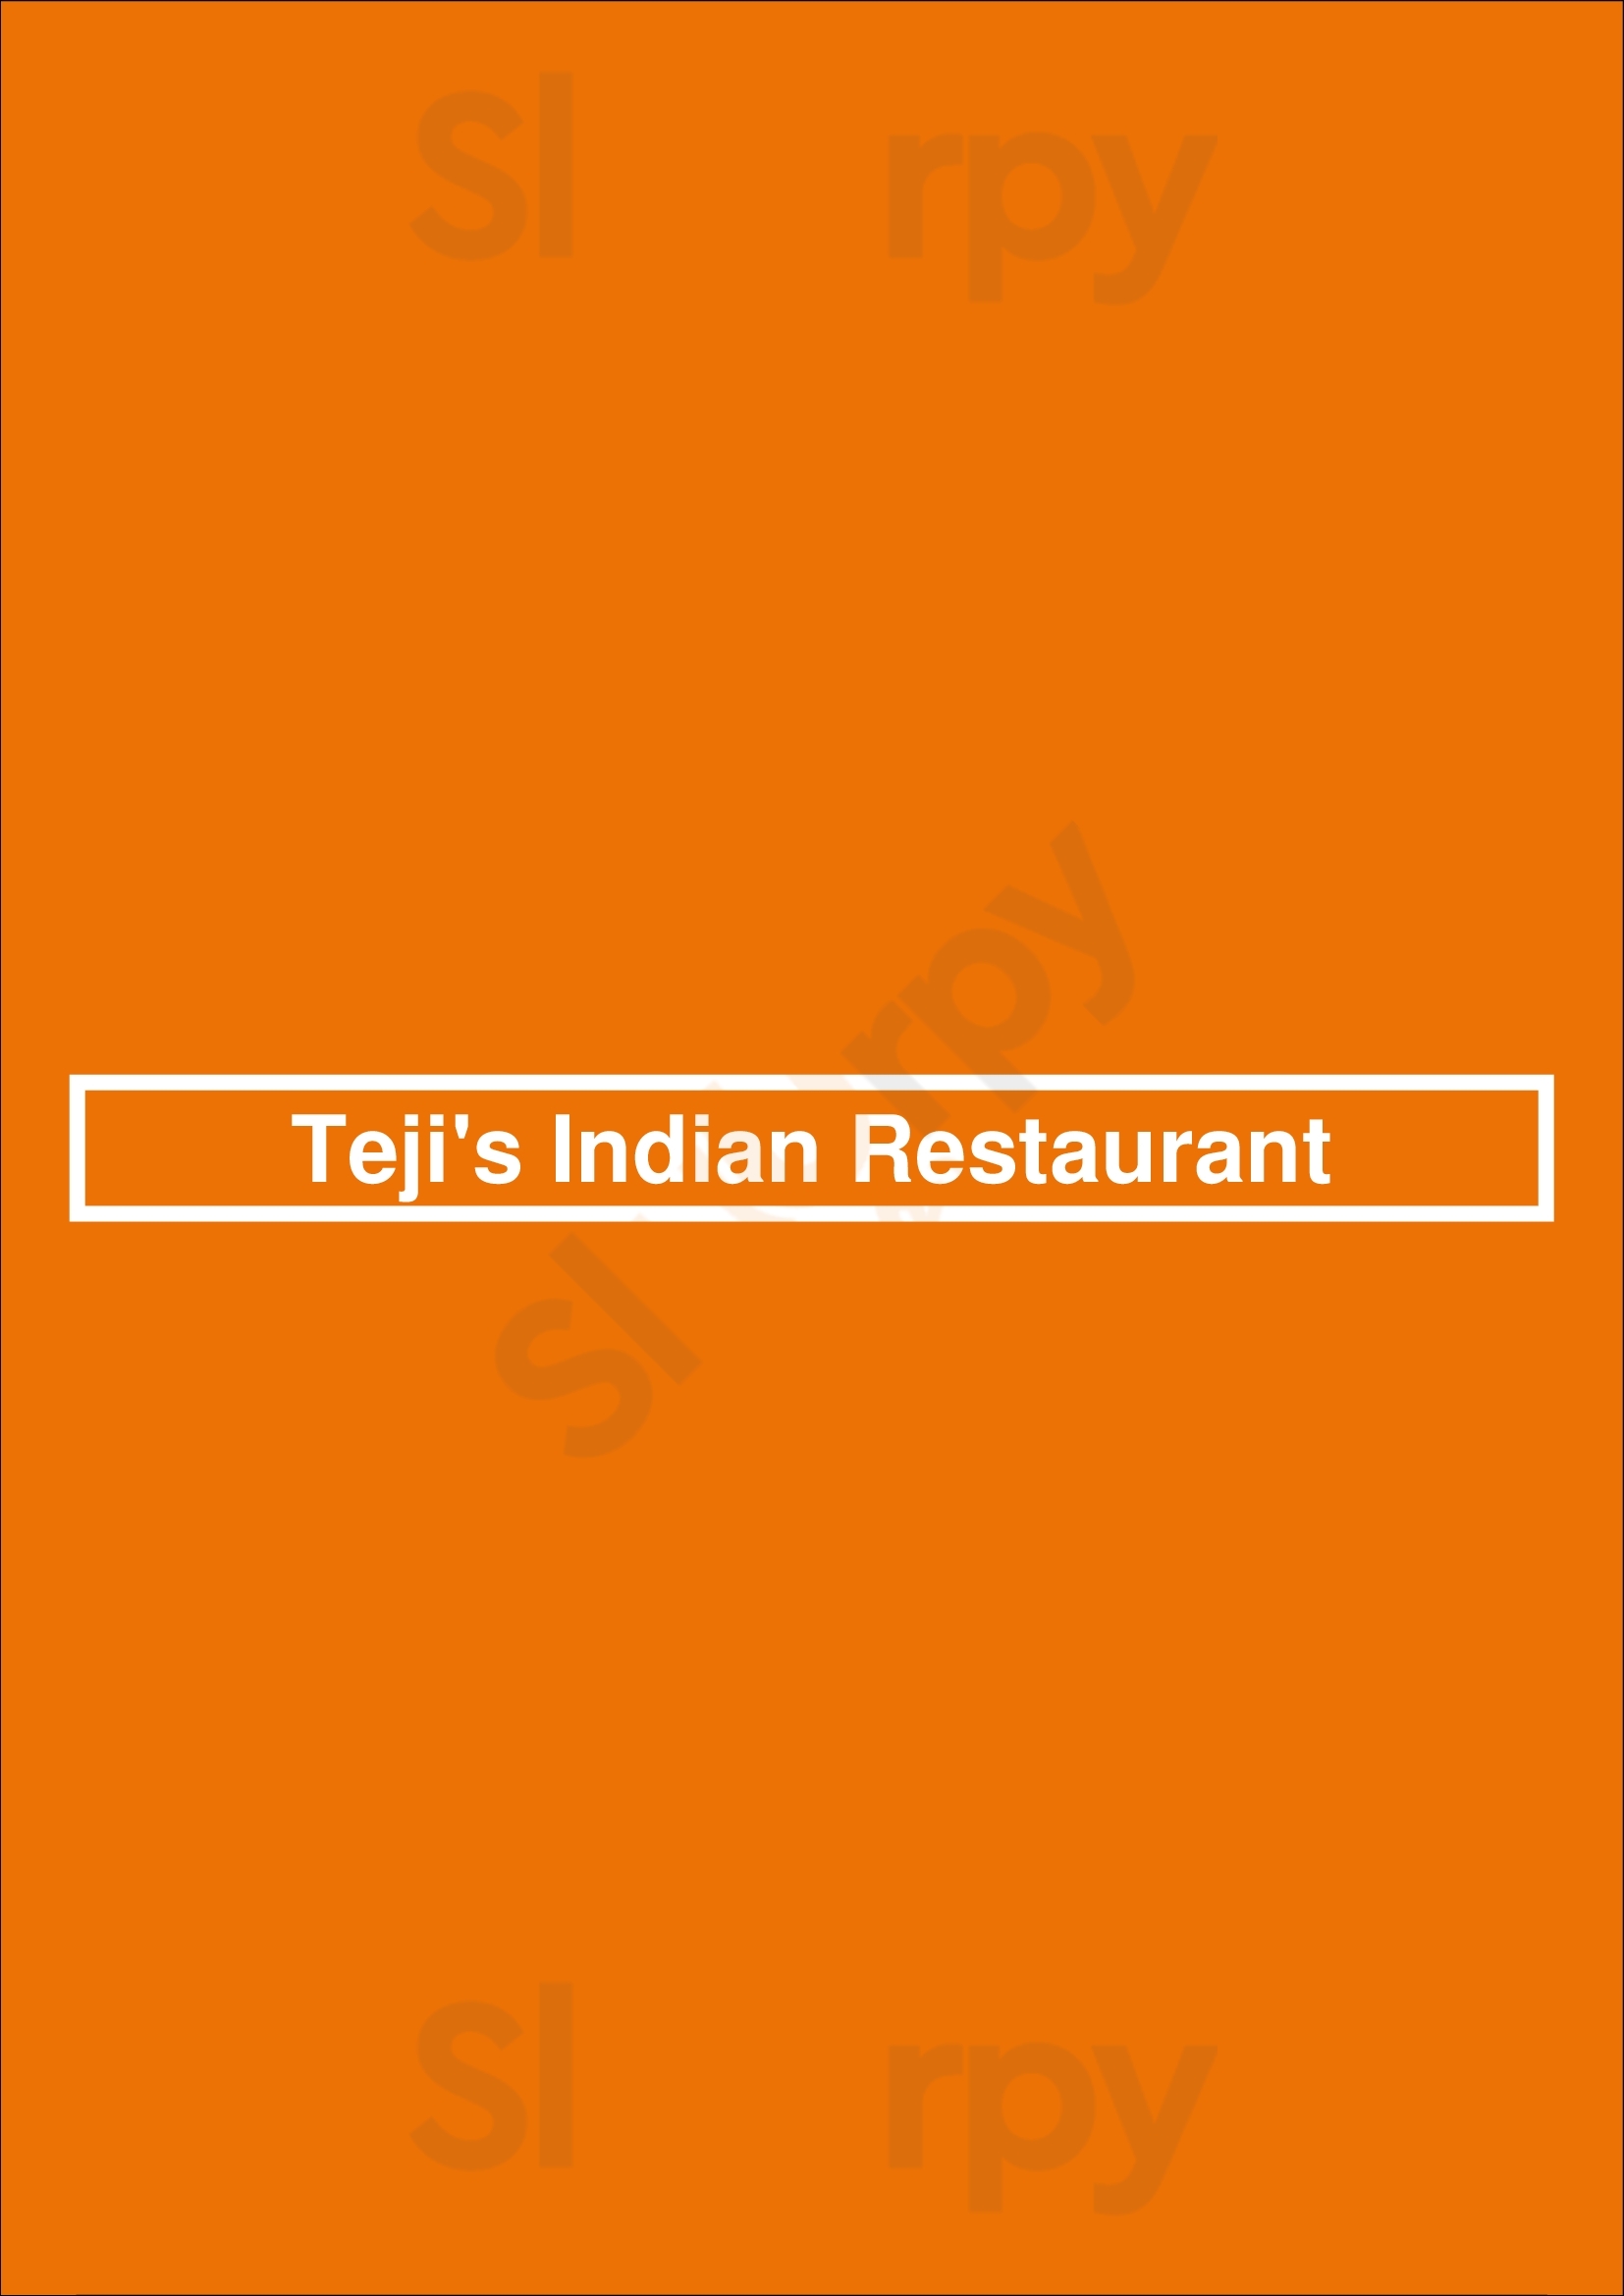 Teji's Indian Restaurant Austin Menu - 1